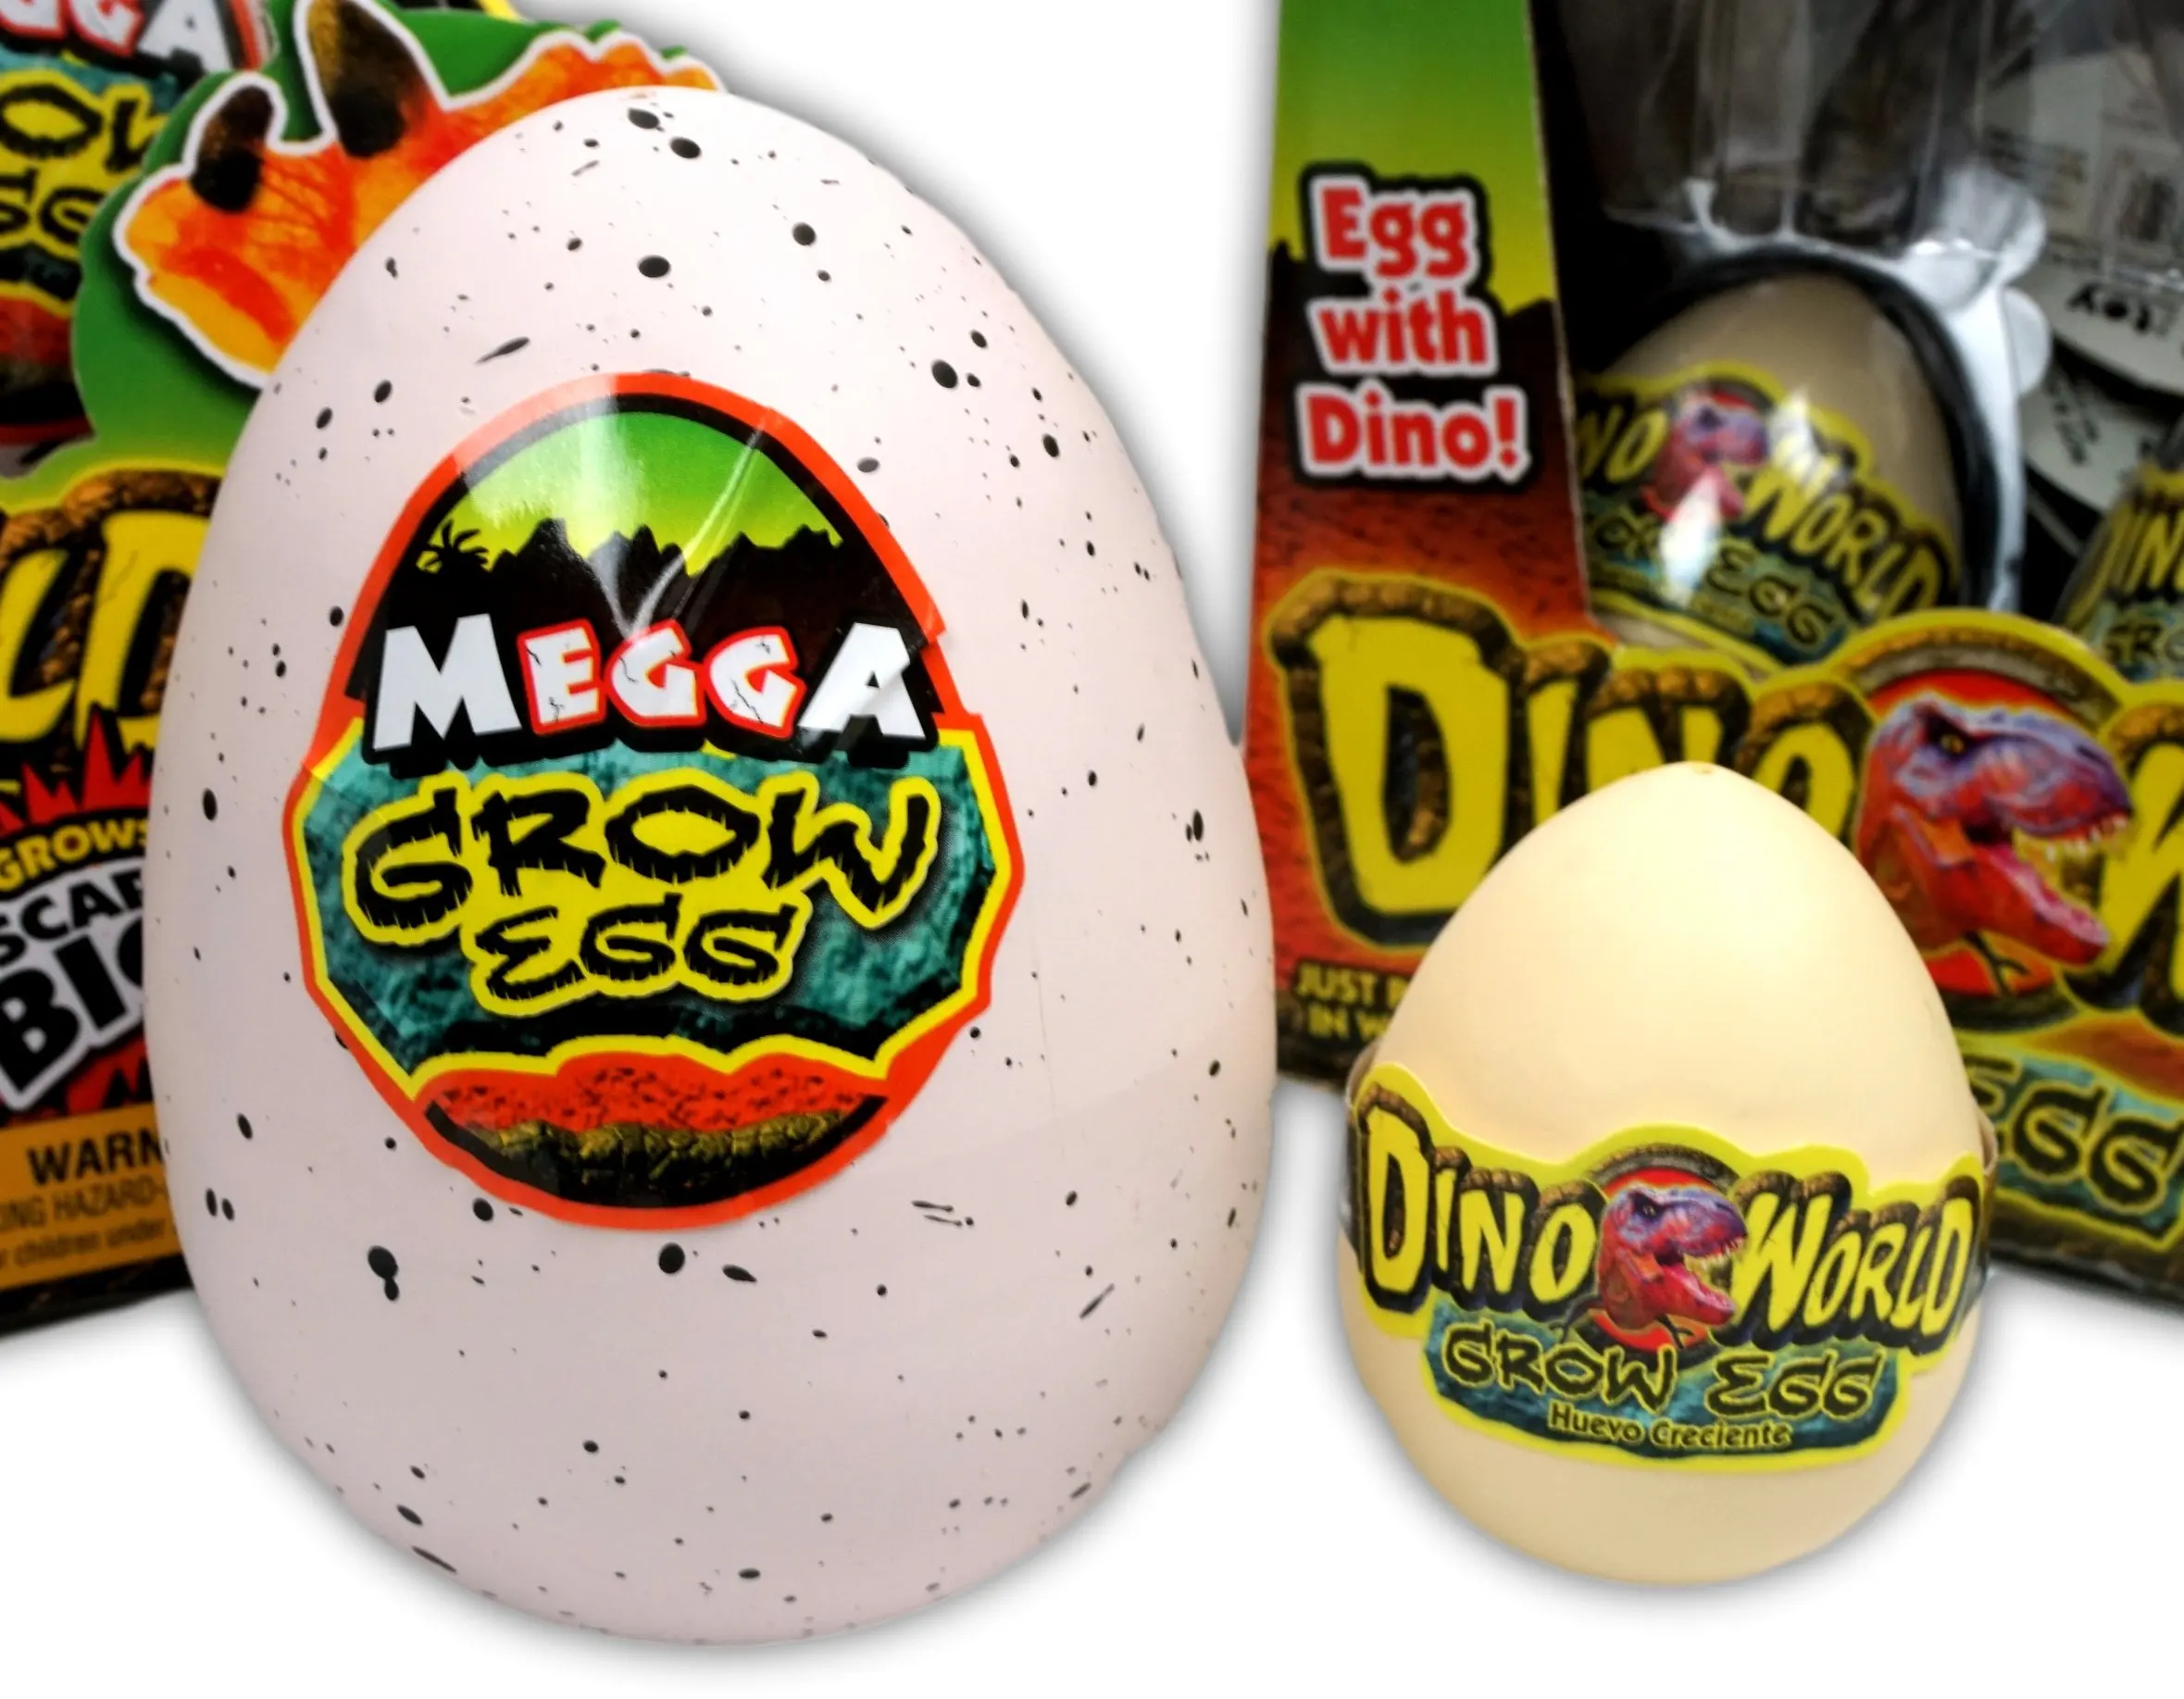 dino world megga grow dinosaur egg